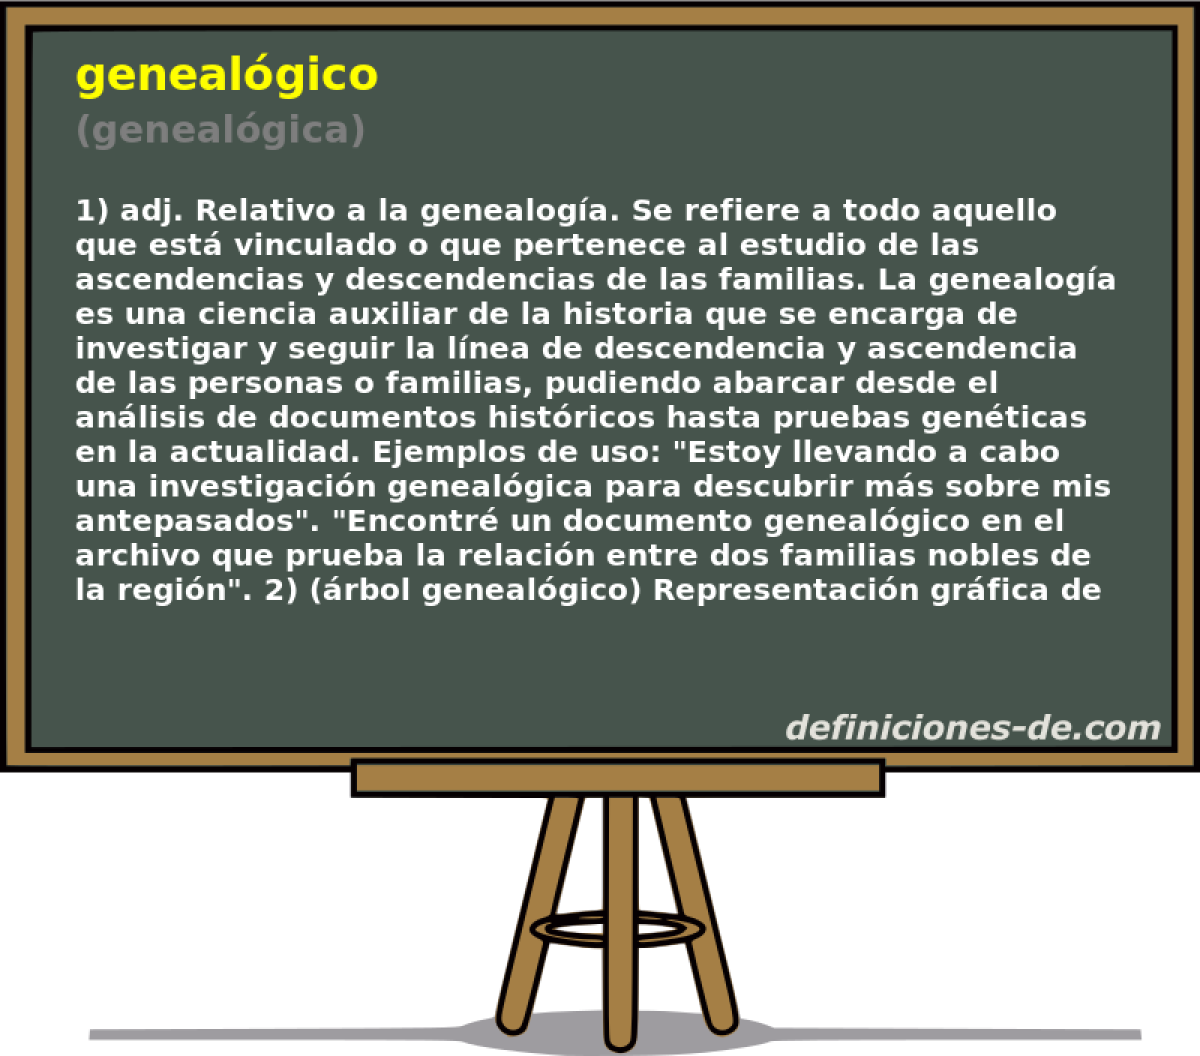 genealgico (genealgica)